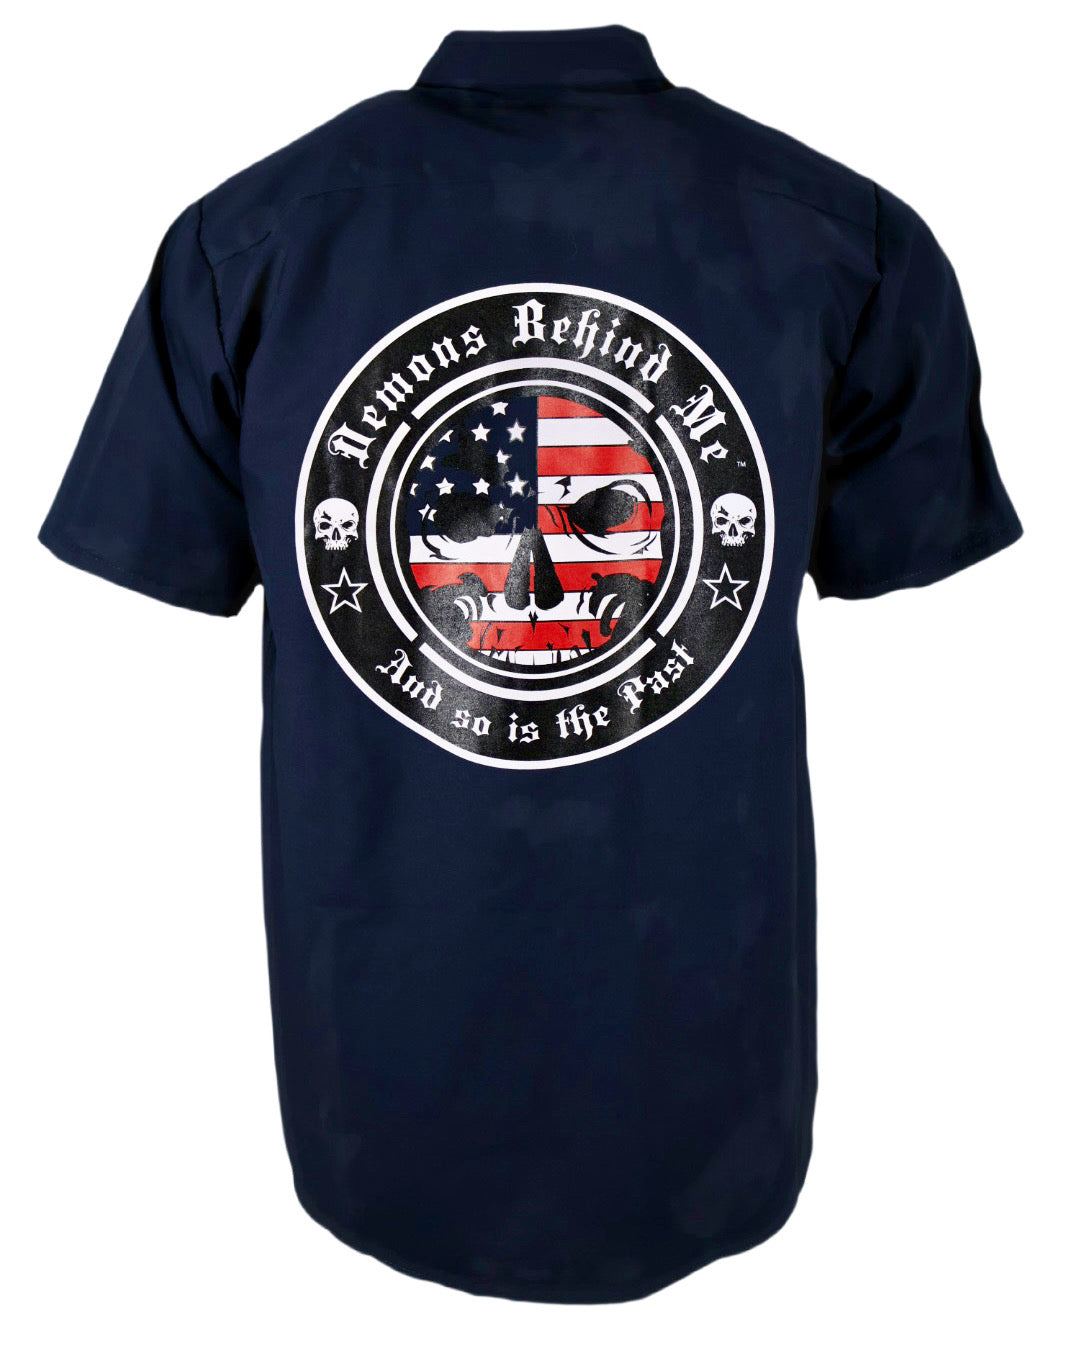 Embroidered Shop Shirt - Men's Navy Patriotic